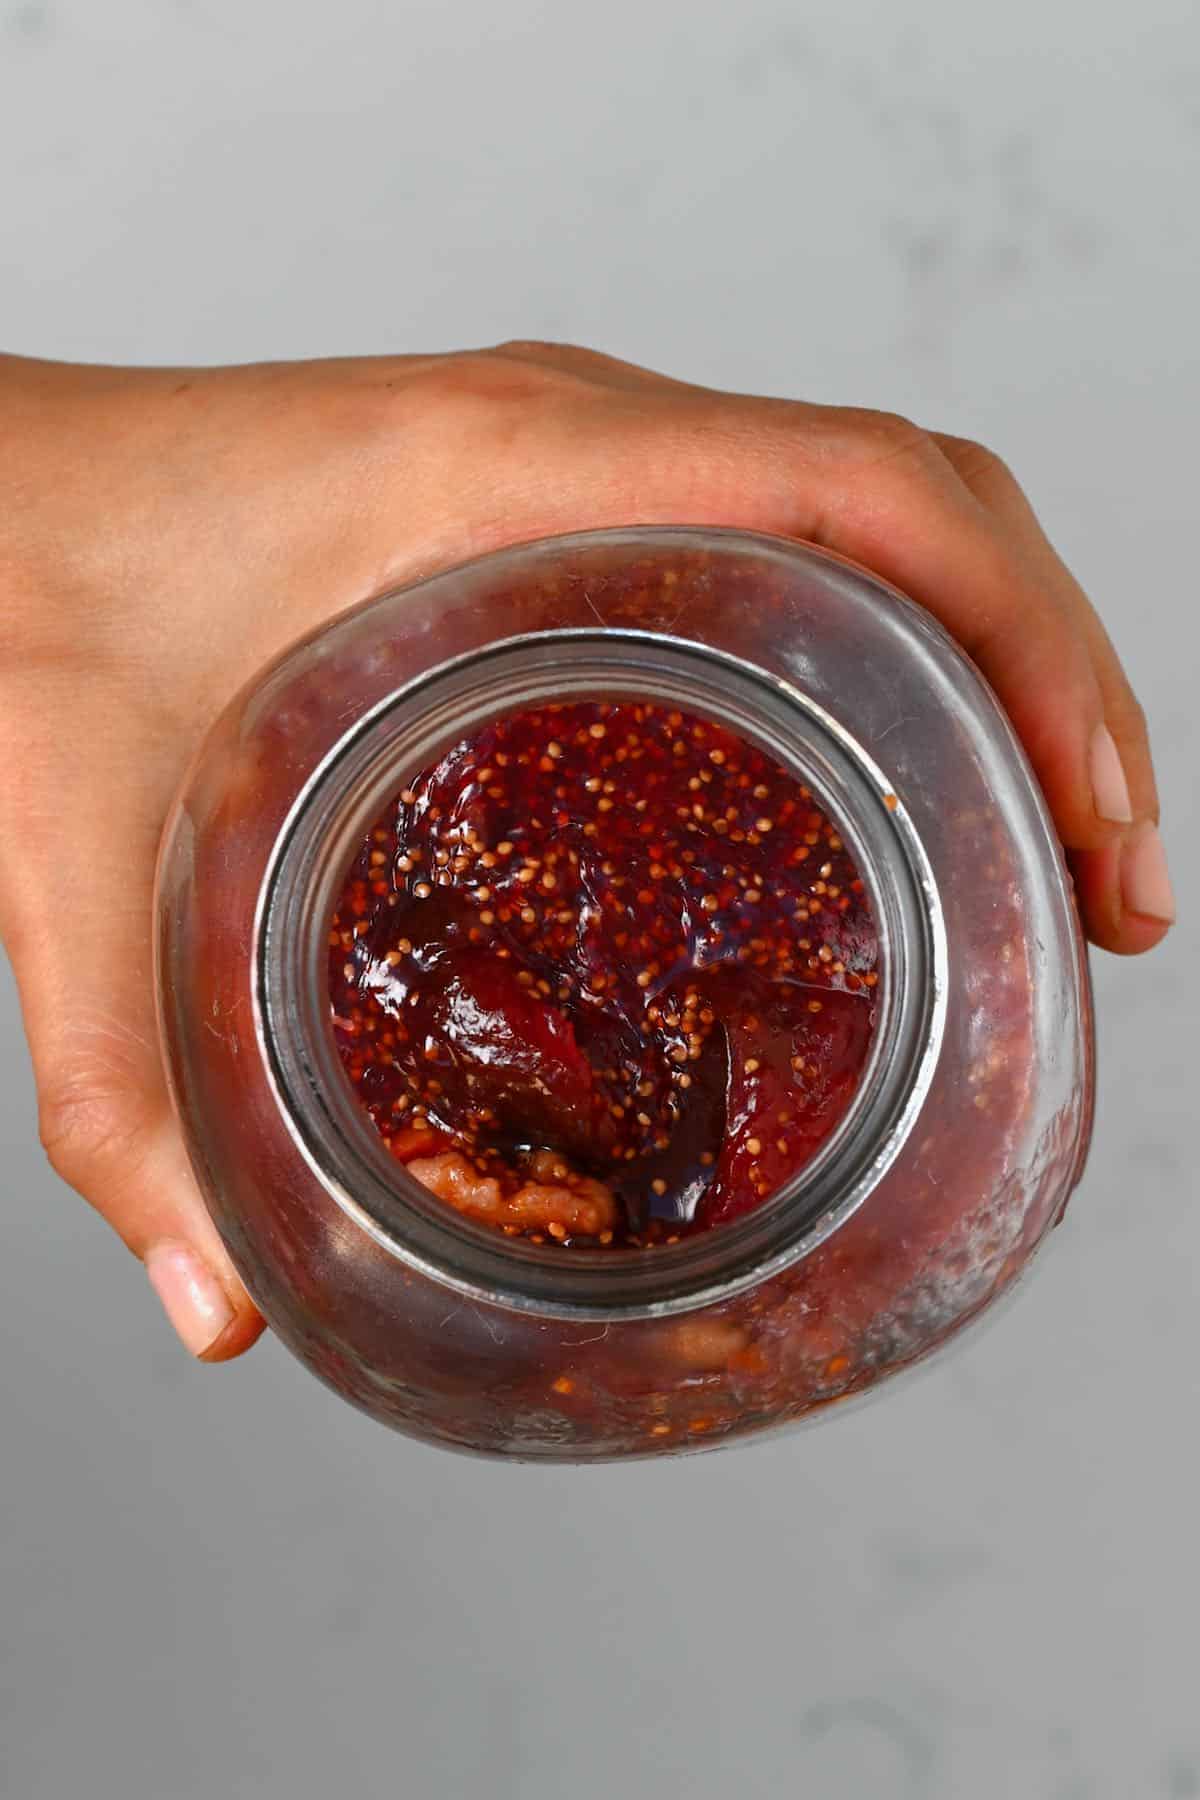 Homemade fig jam in a jar